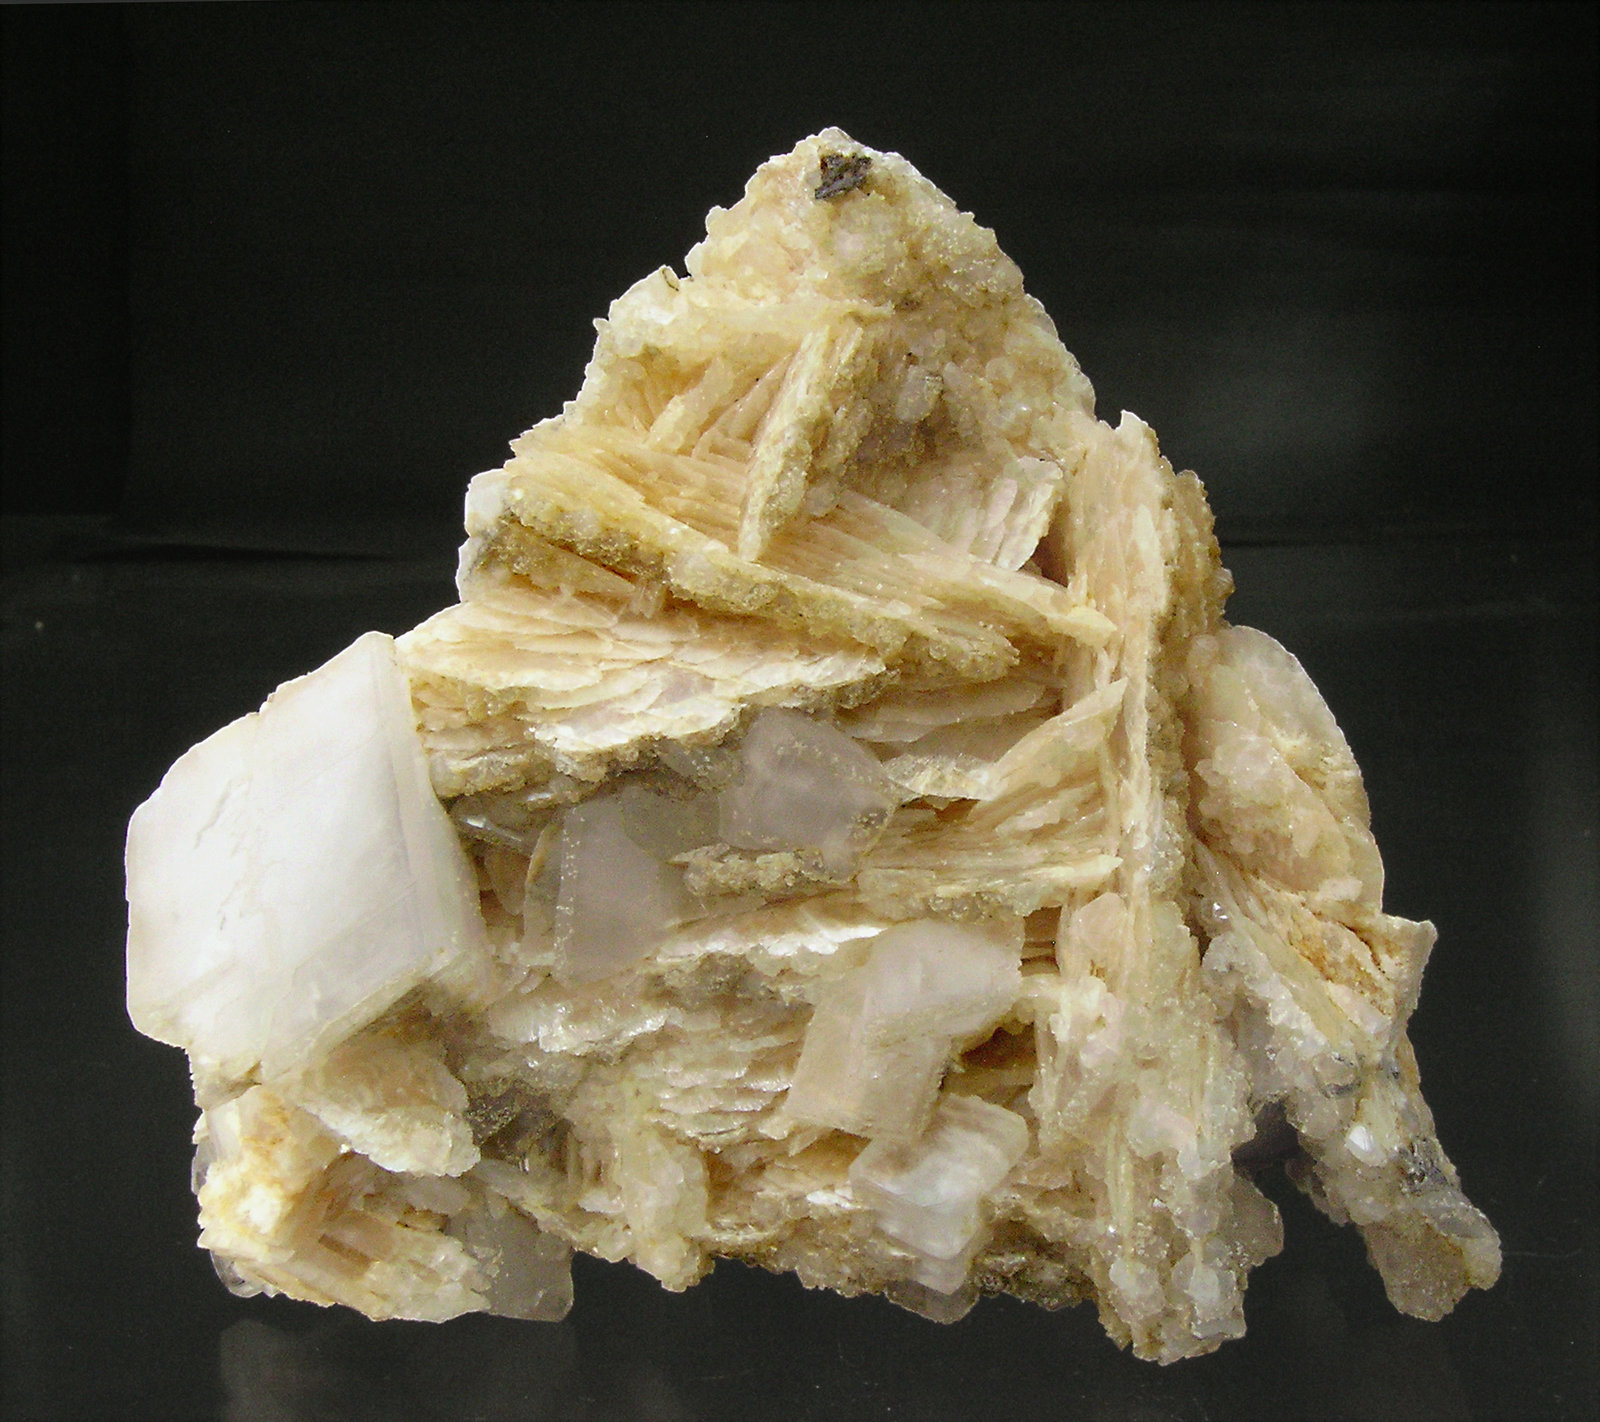 specimens/s_imagesN6/Dolomite-M46JN6f.jpg